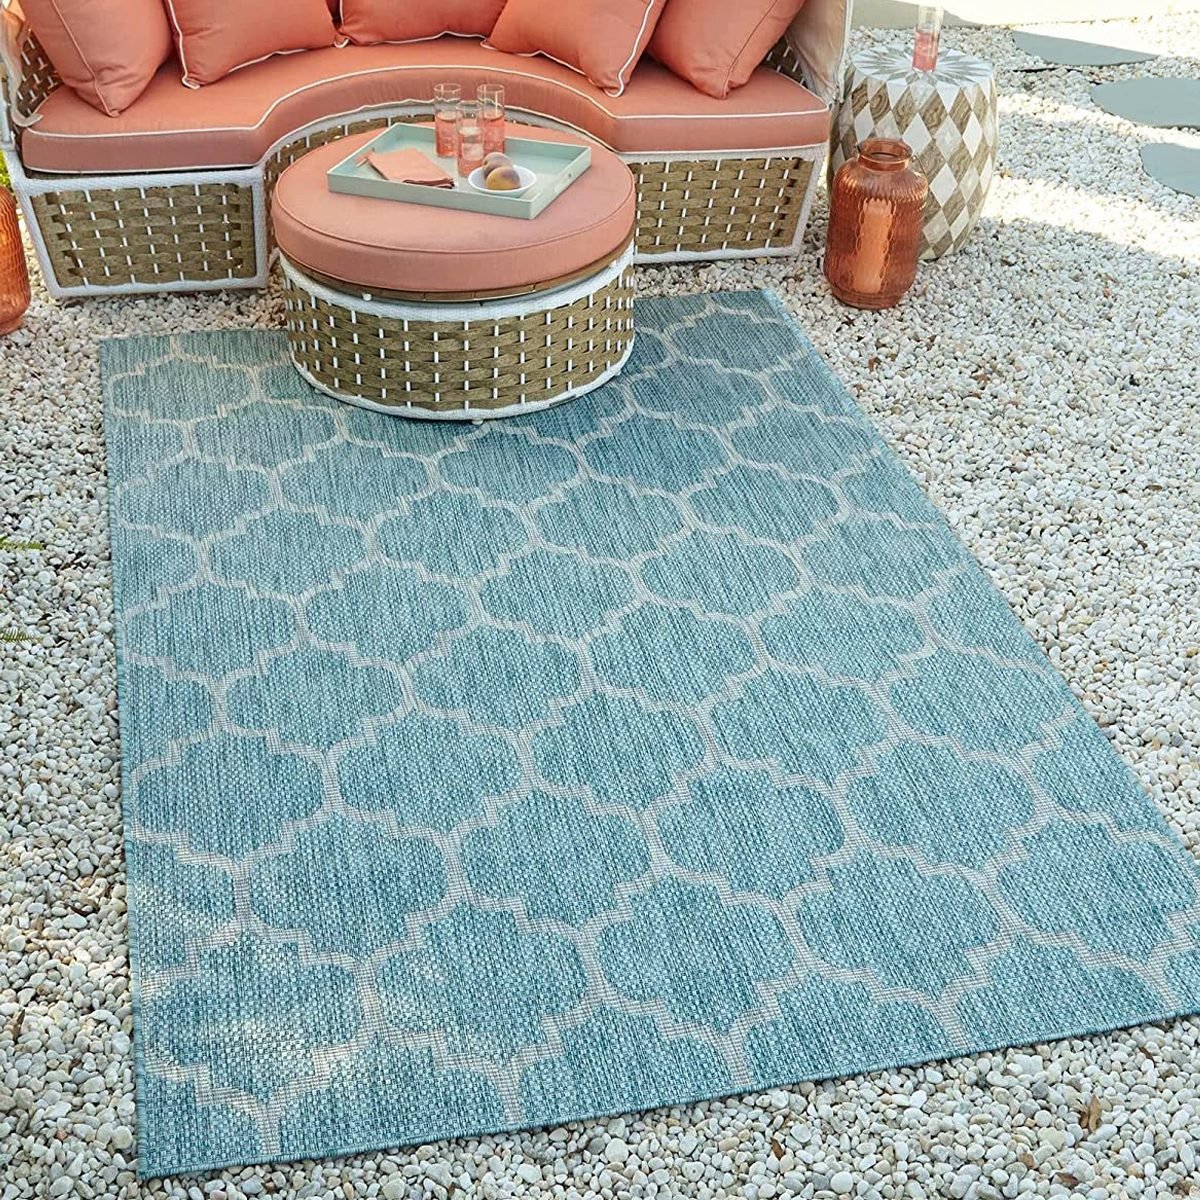 Unique Loom Trellis Collection Area Rug Lattice Design, Moroccan Inspired For Indoor Outdoor Décor Ecomm Amazon.com